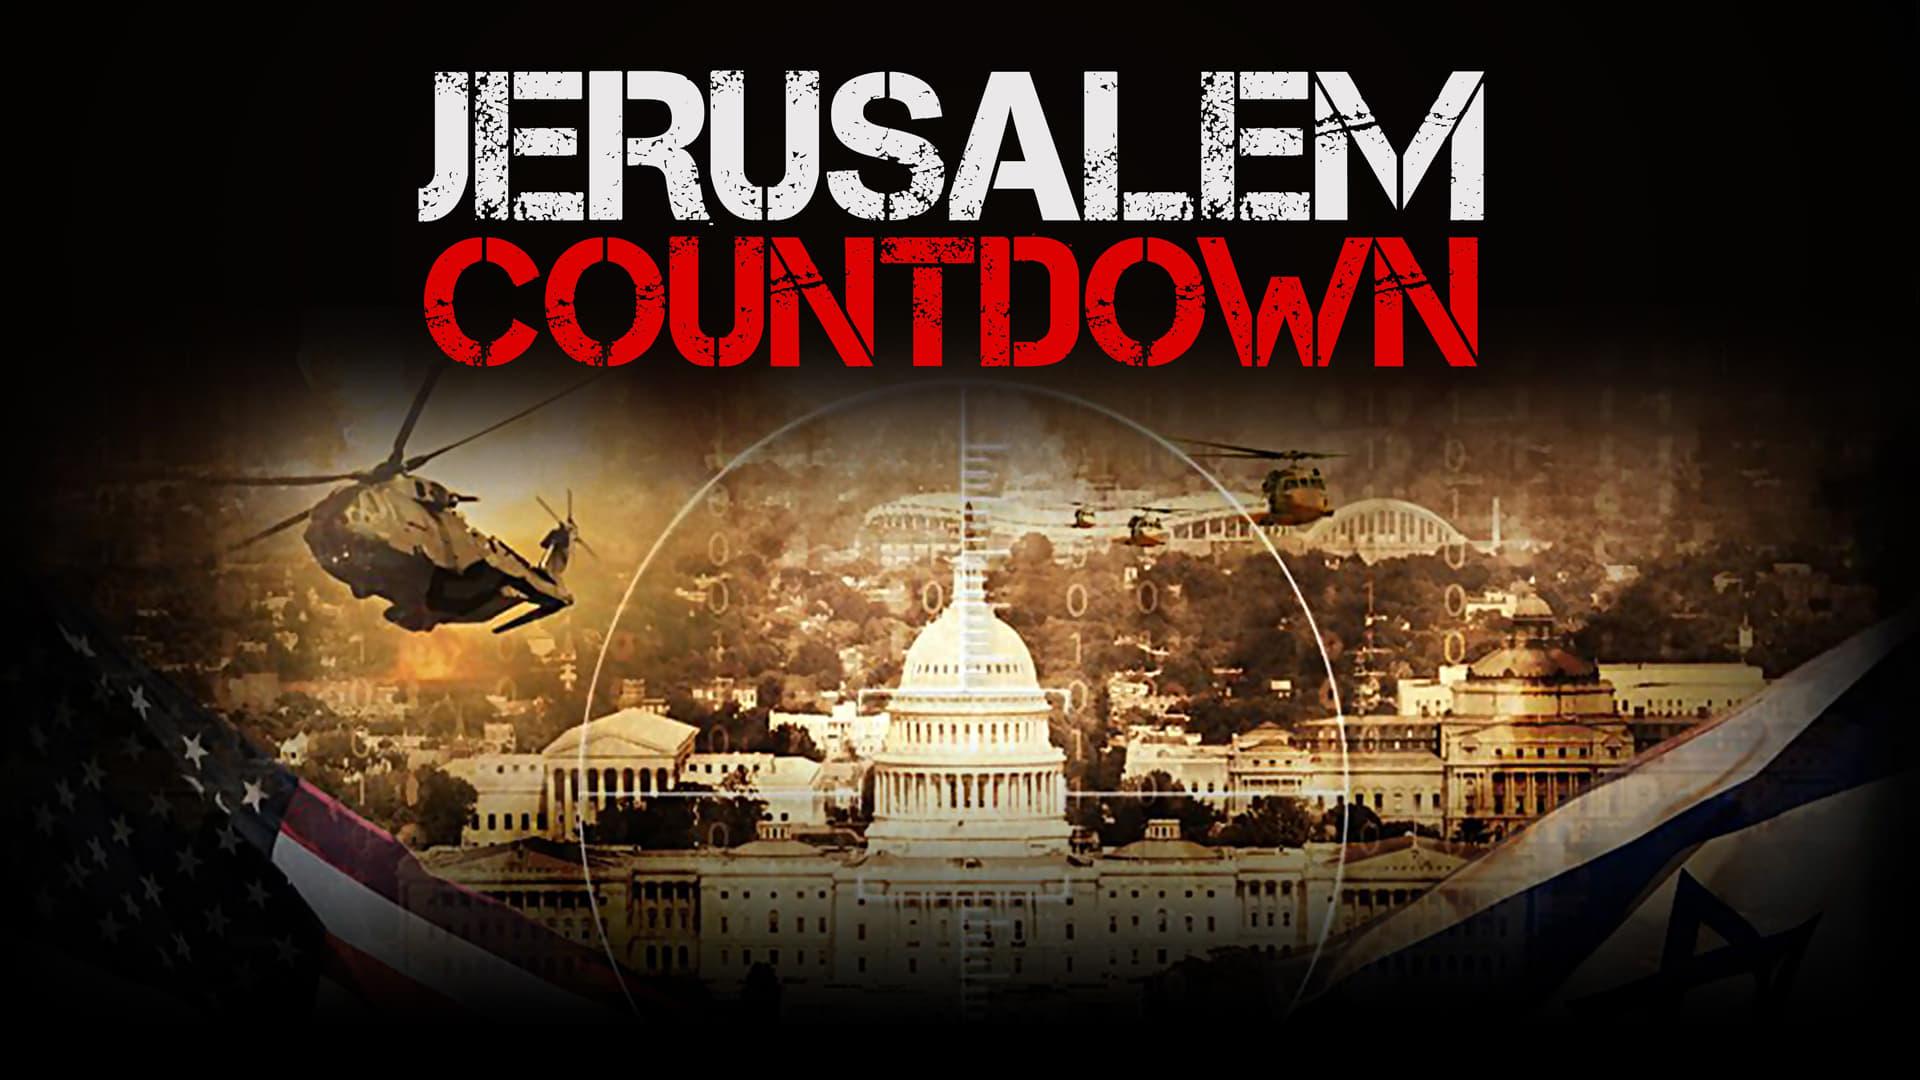 Jerusalem Countdown backdrop